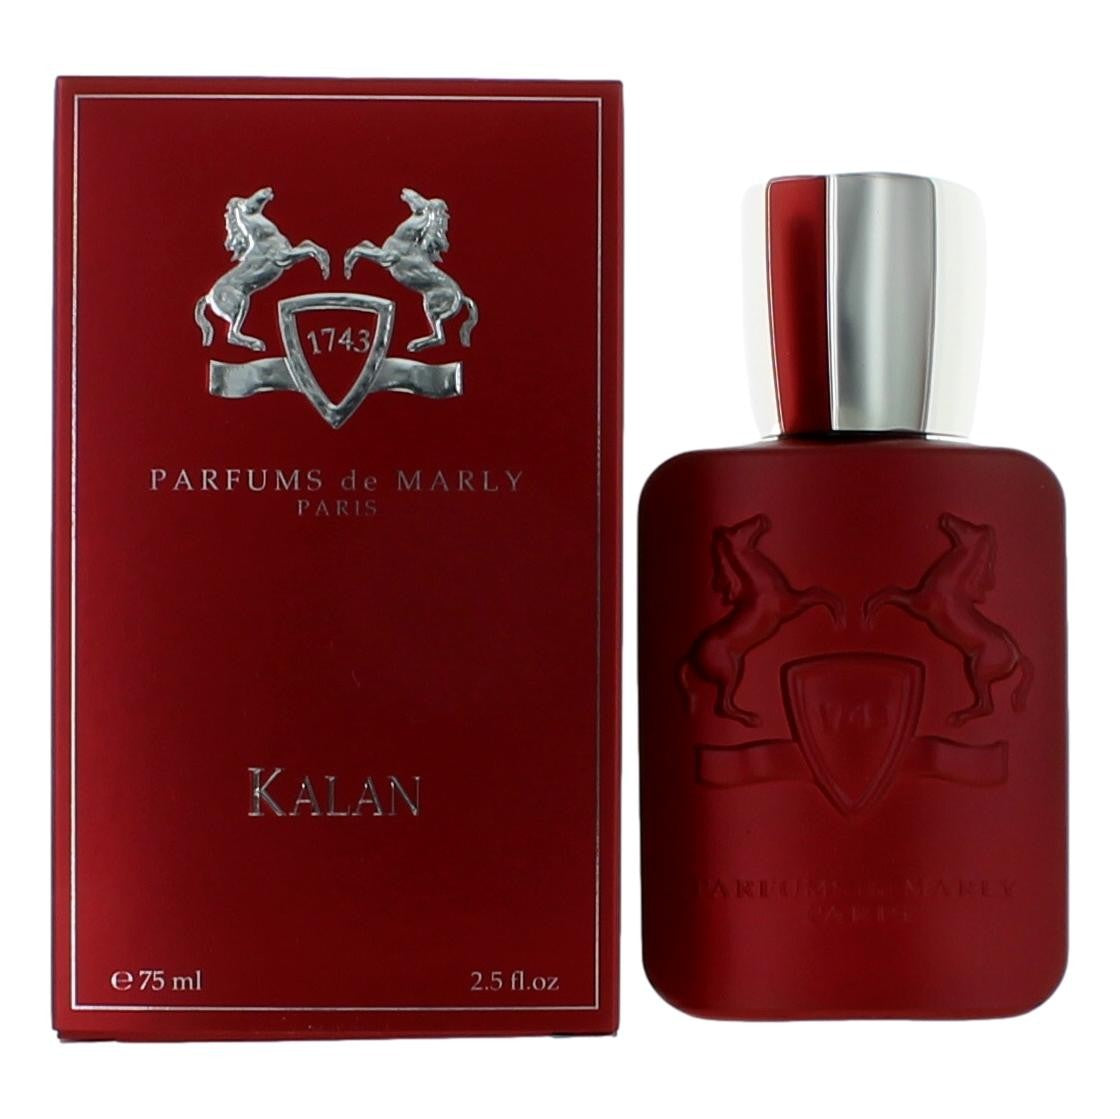 Parfums de Marly Kalan by Parfums de Marly, 2.5 oz Eau De Parfum Spray for Men